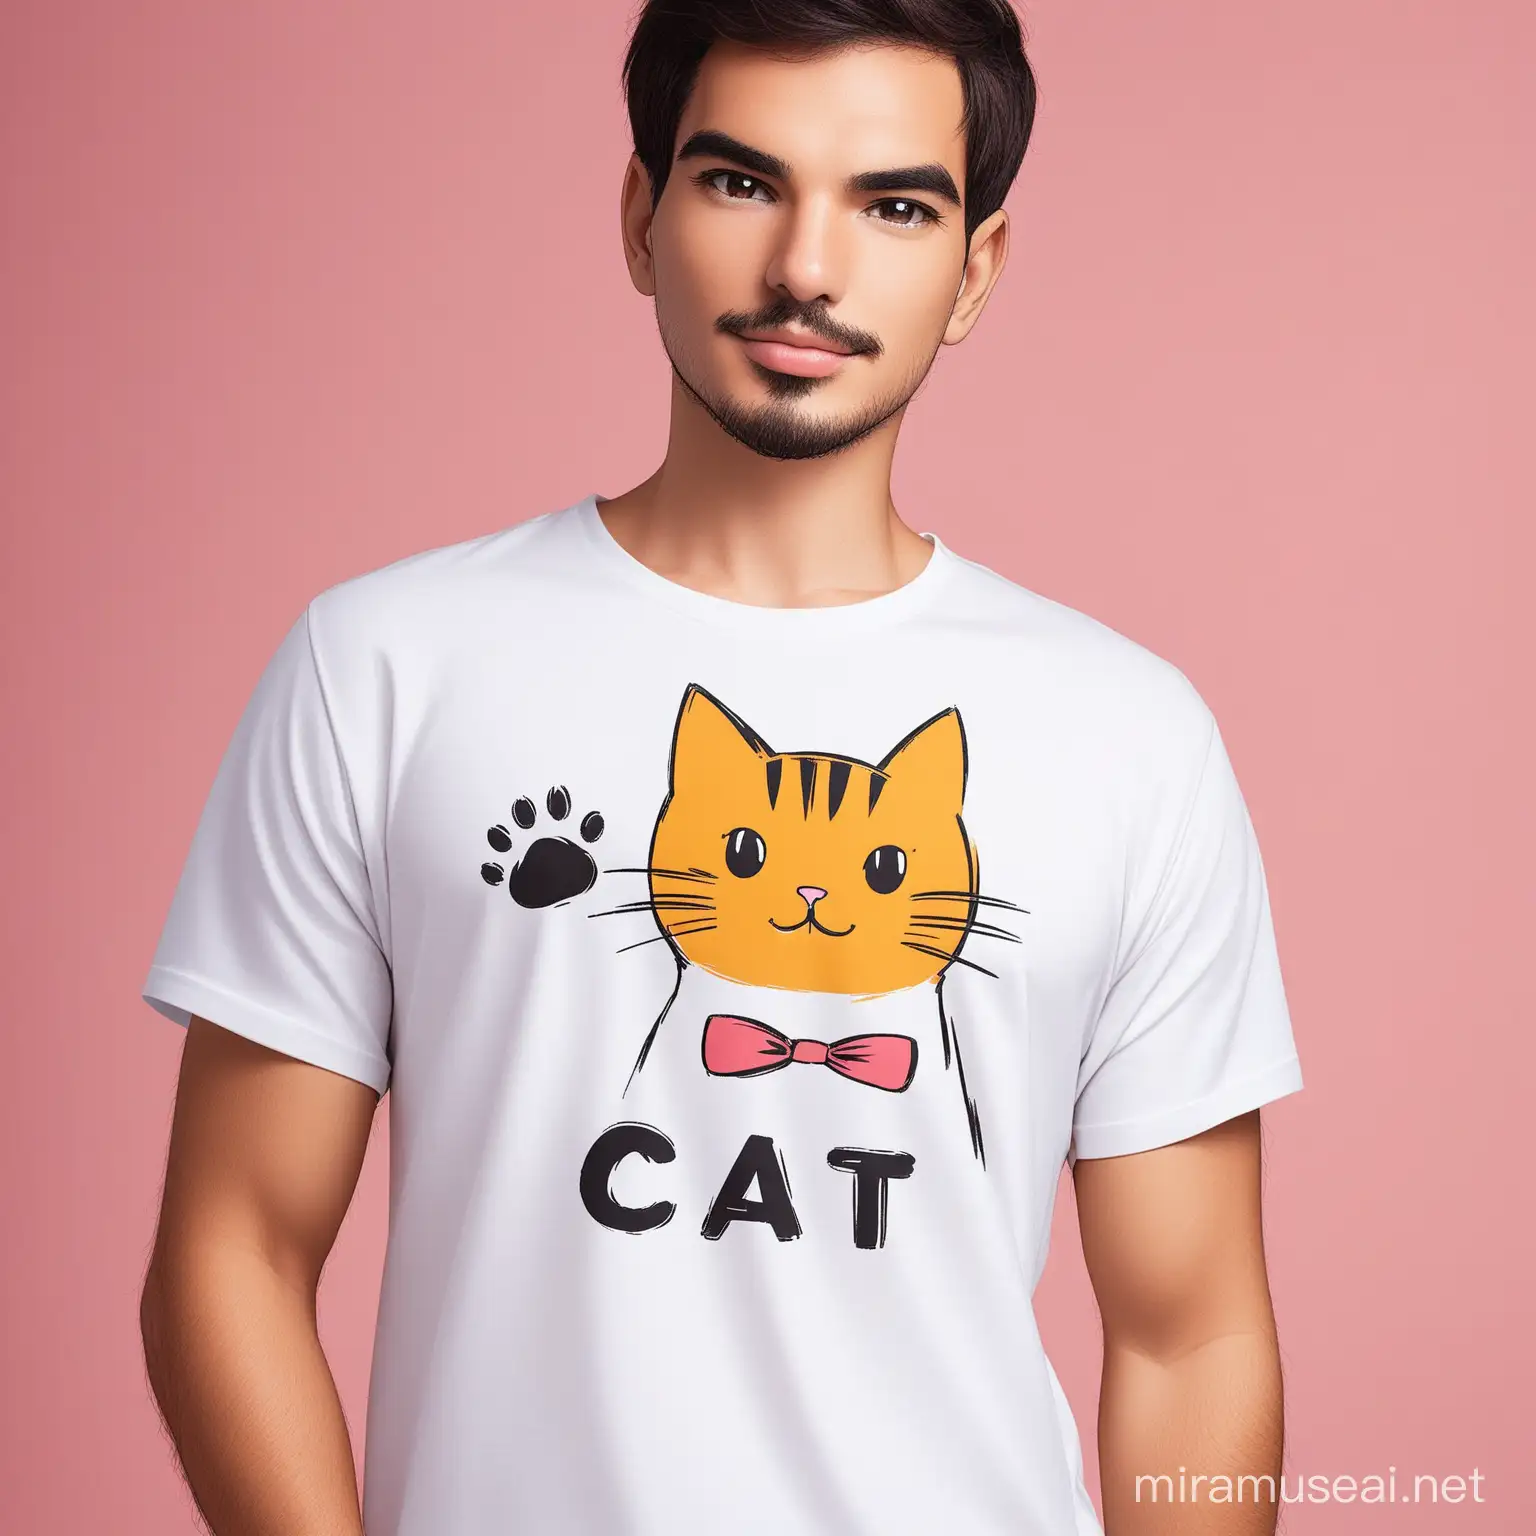 Adorable Cat Print TShirt Alberto Cat Design for Feline Lovers